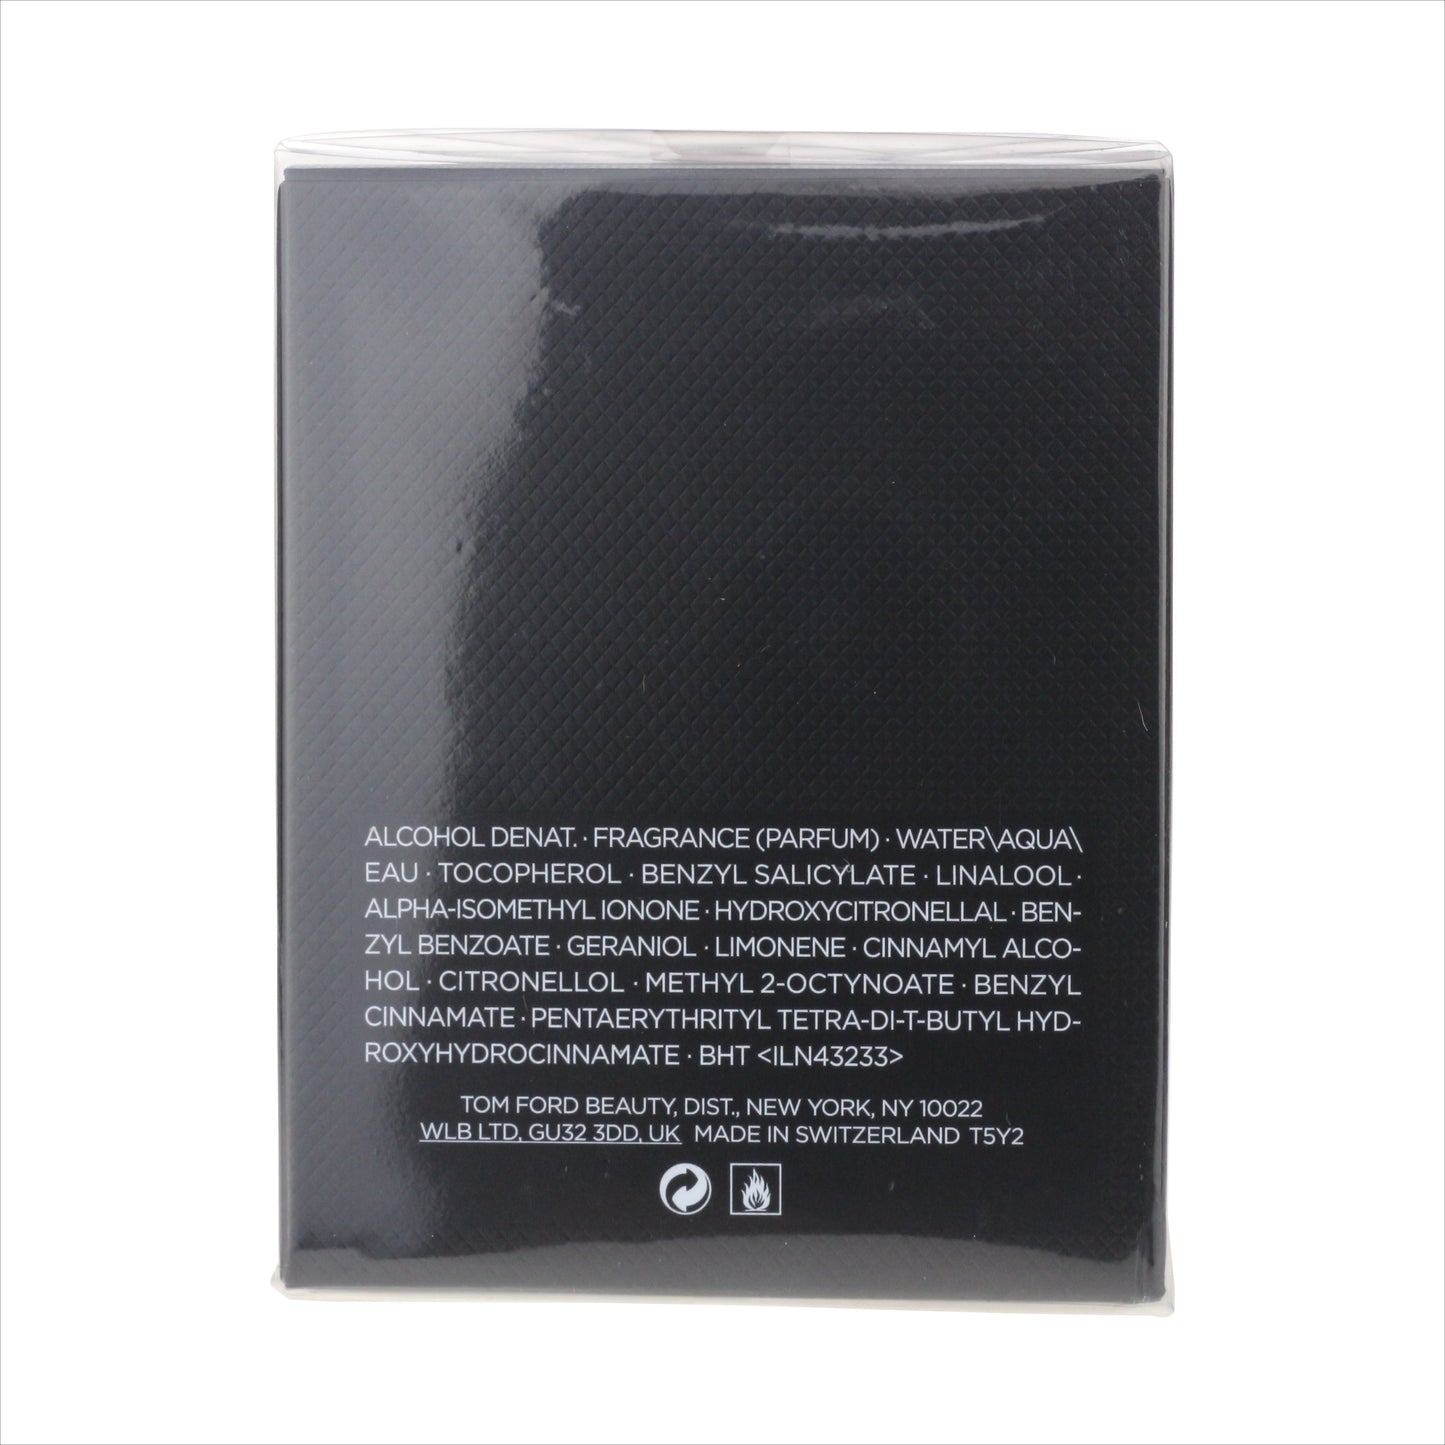 Tom Ford Ombre Leather Eau De Parfum 1.7oz/50ml New In Box